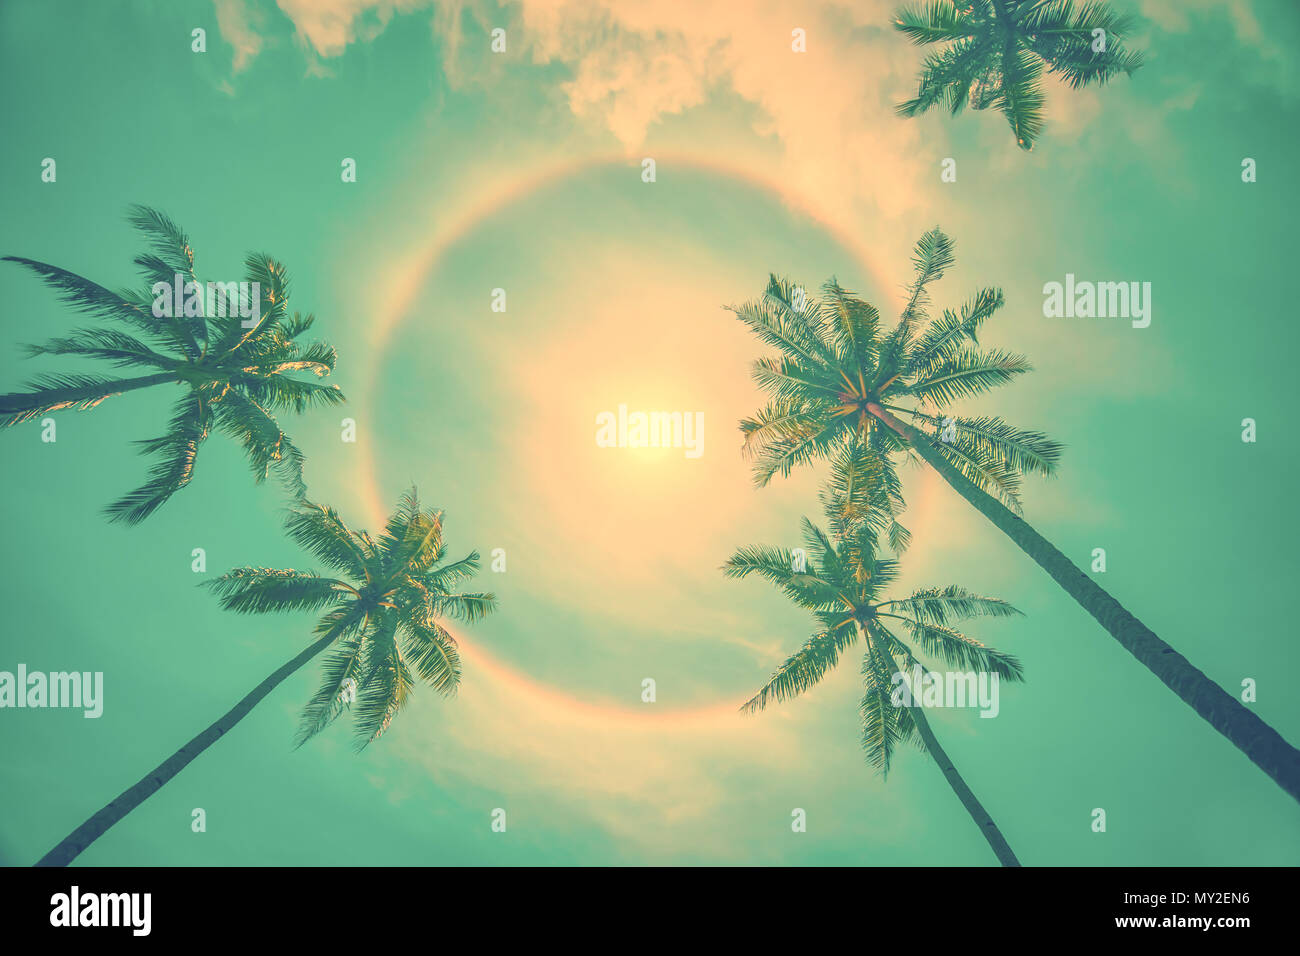 Sun rainbow Runde halo Phänomen mit Palmen, vintage Sommer Hintergrund Stockfoto